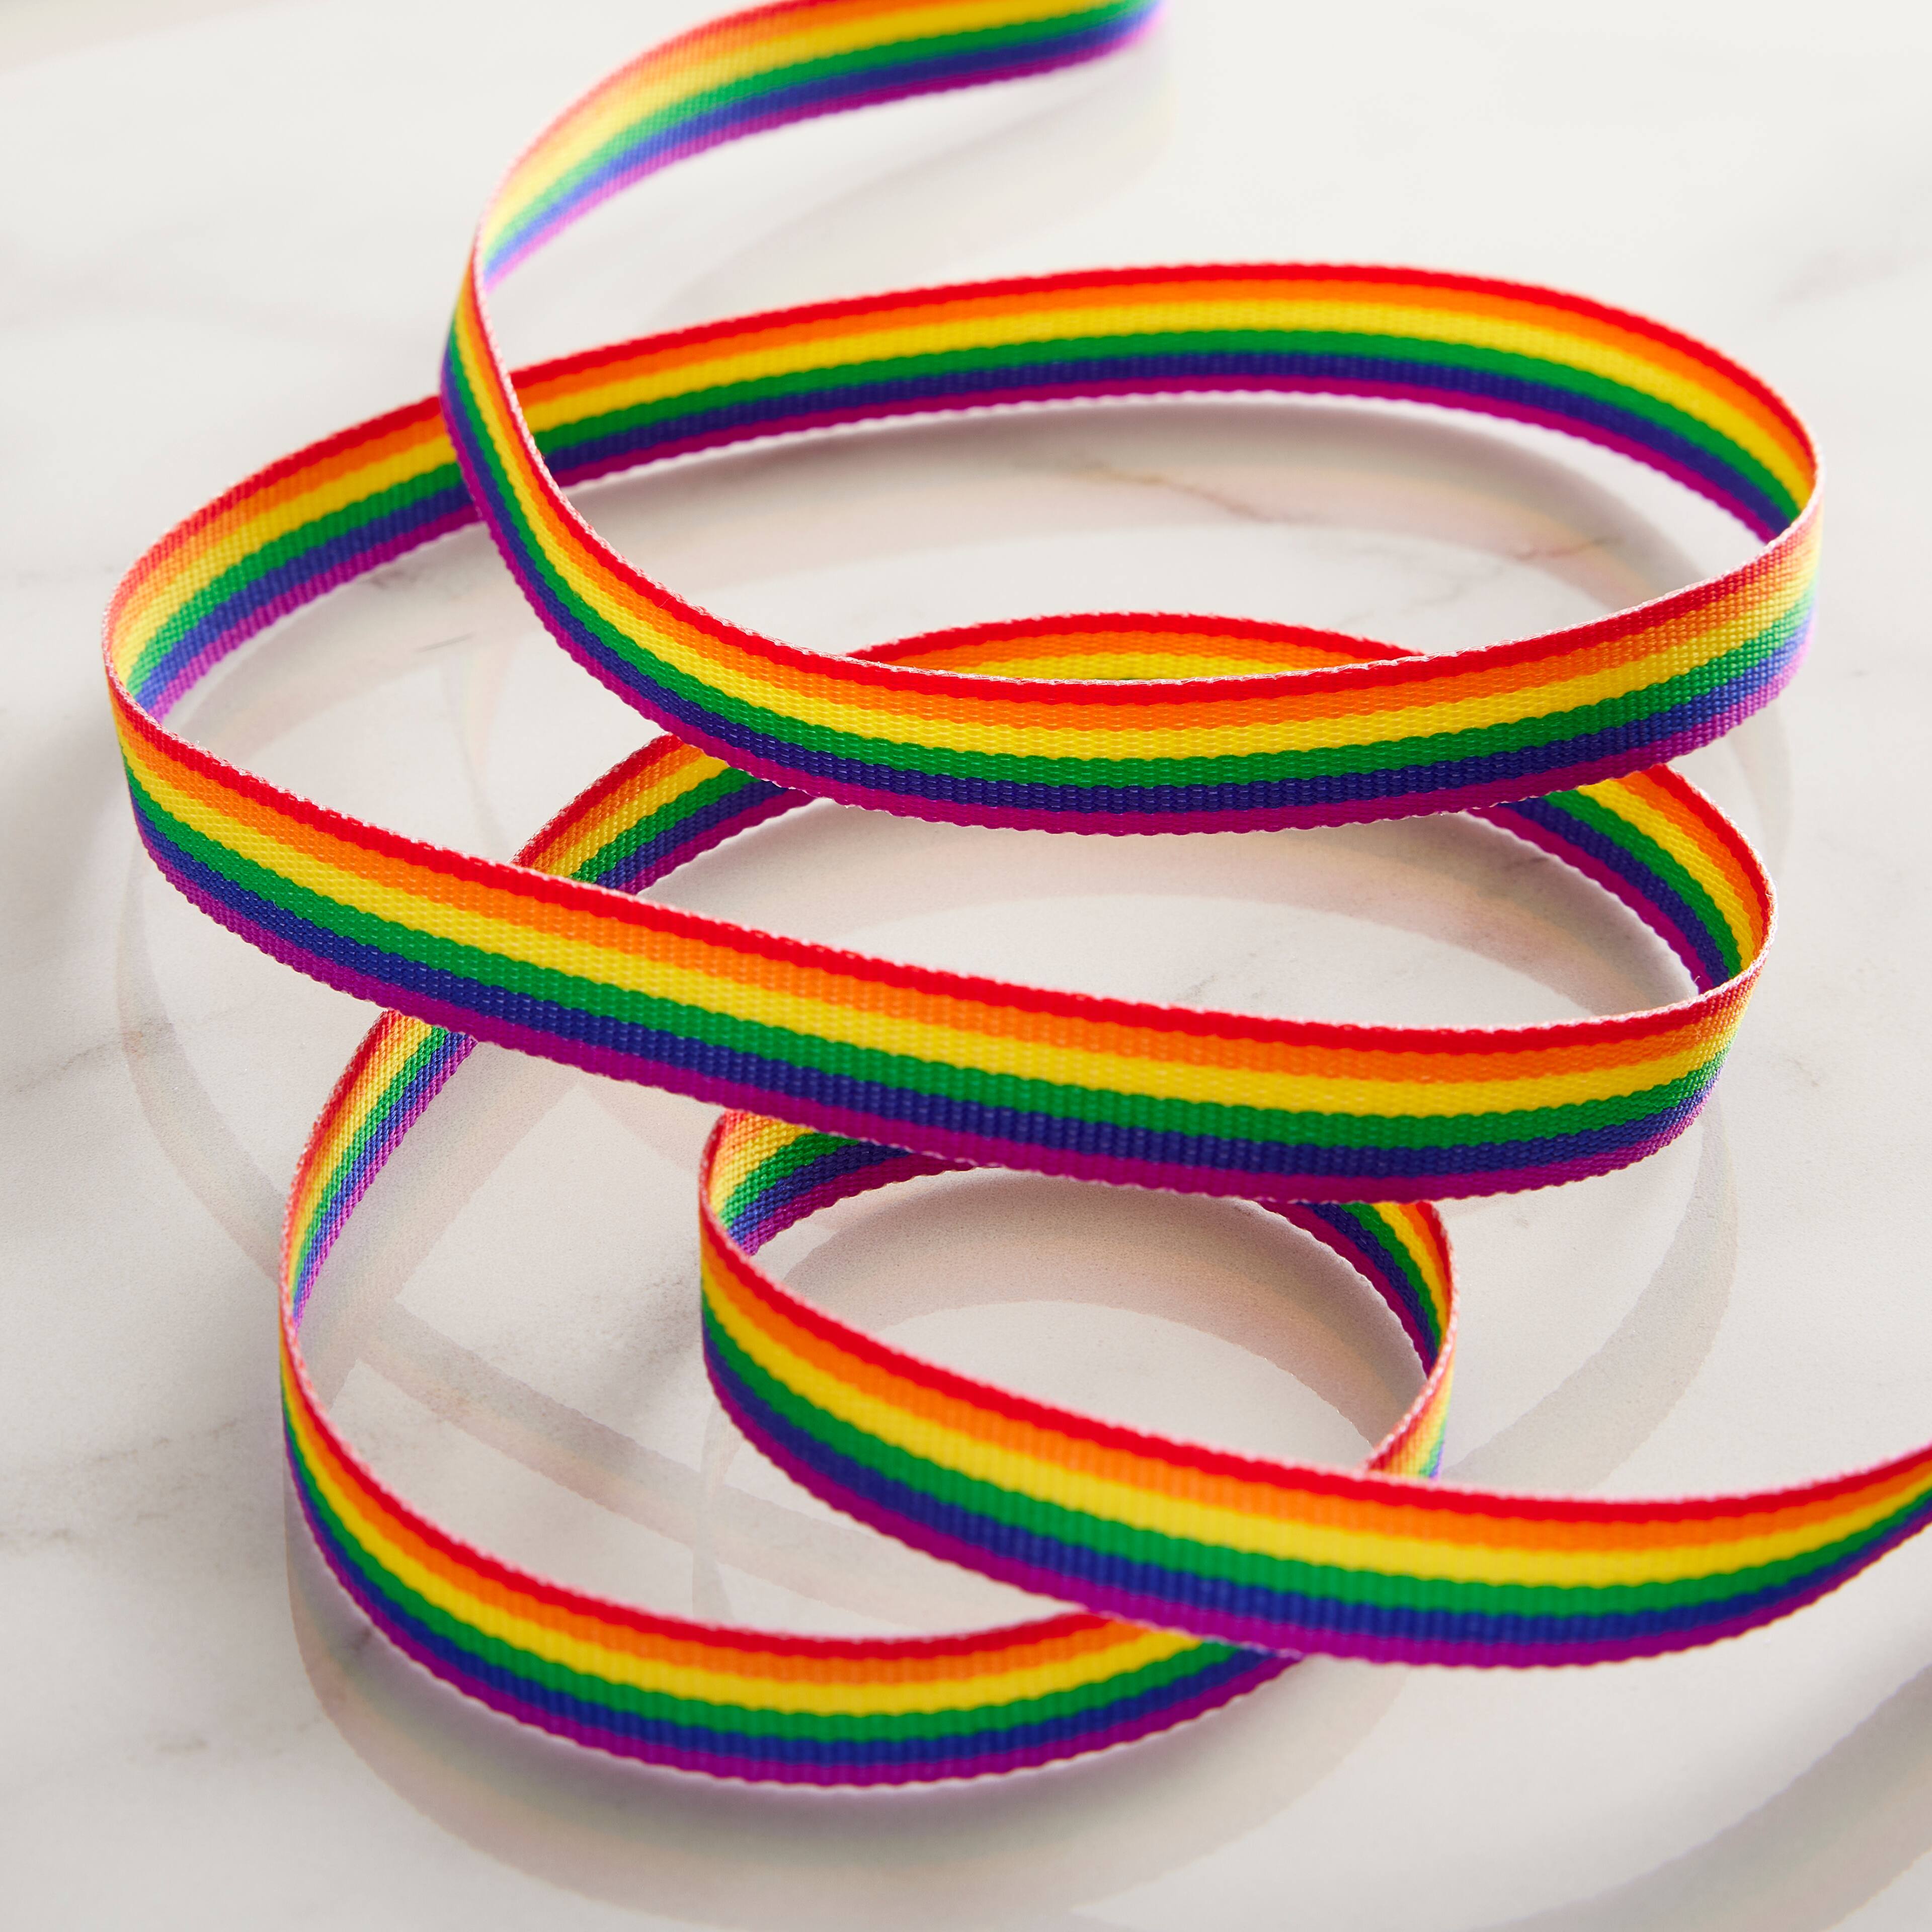 12 Pack: 3/8 x 7yd. Grosgrain Rainbow Ribbon by Celebrate It™